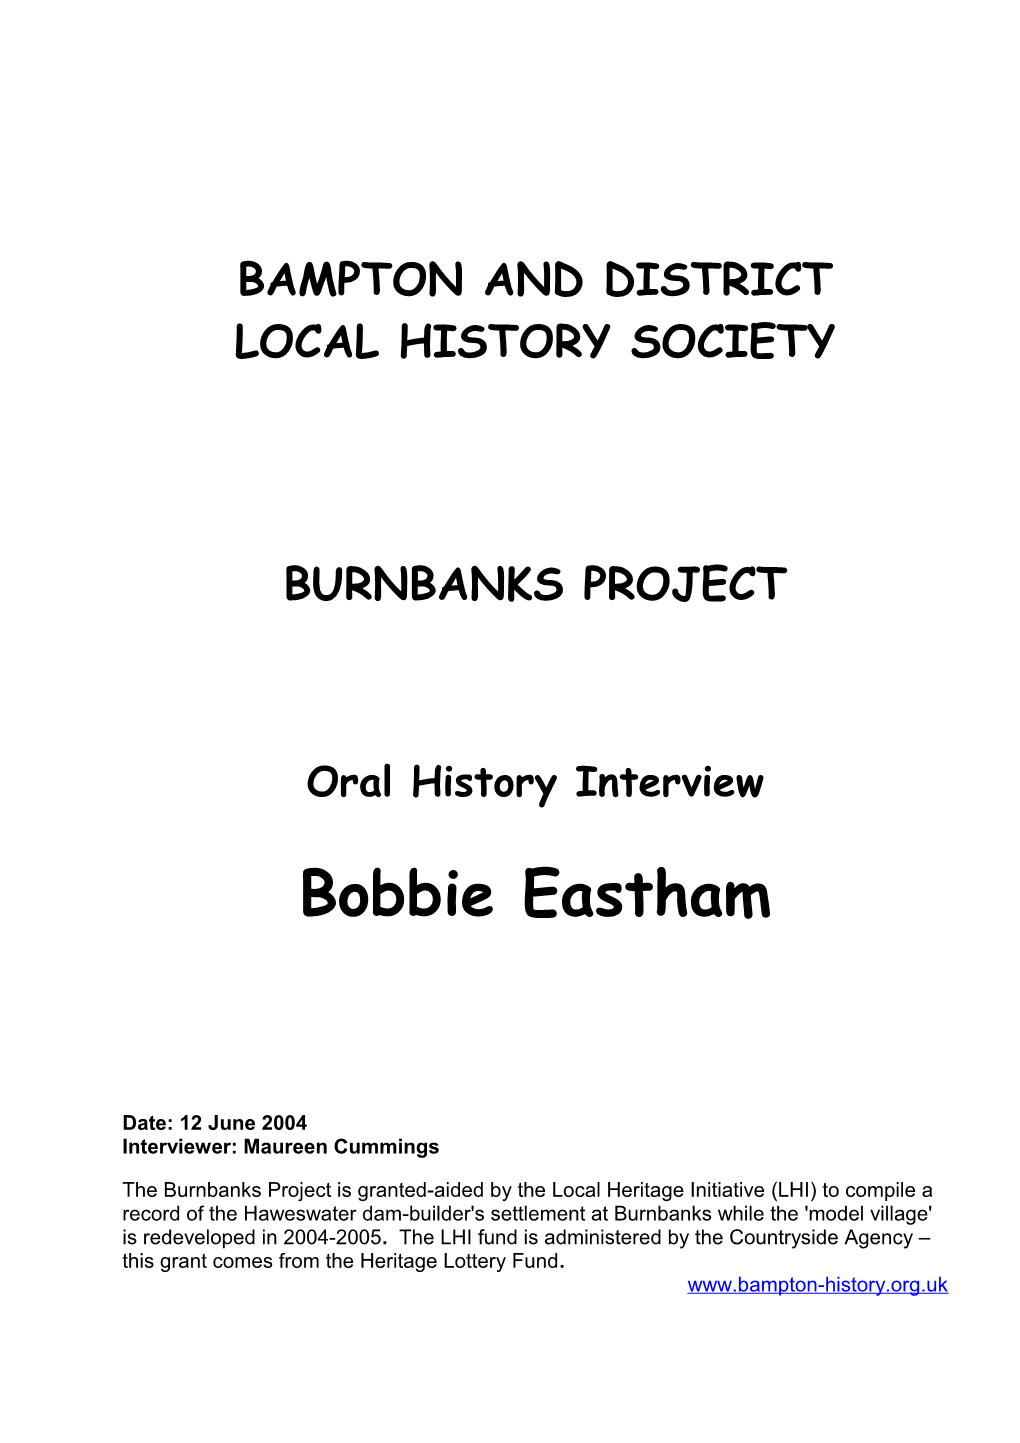 Burnbanks Project: Oral History